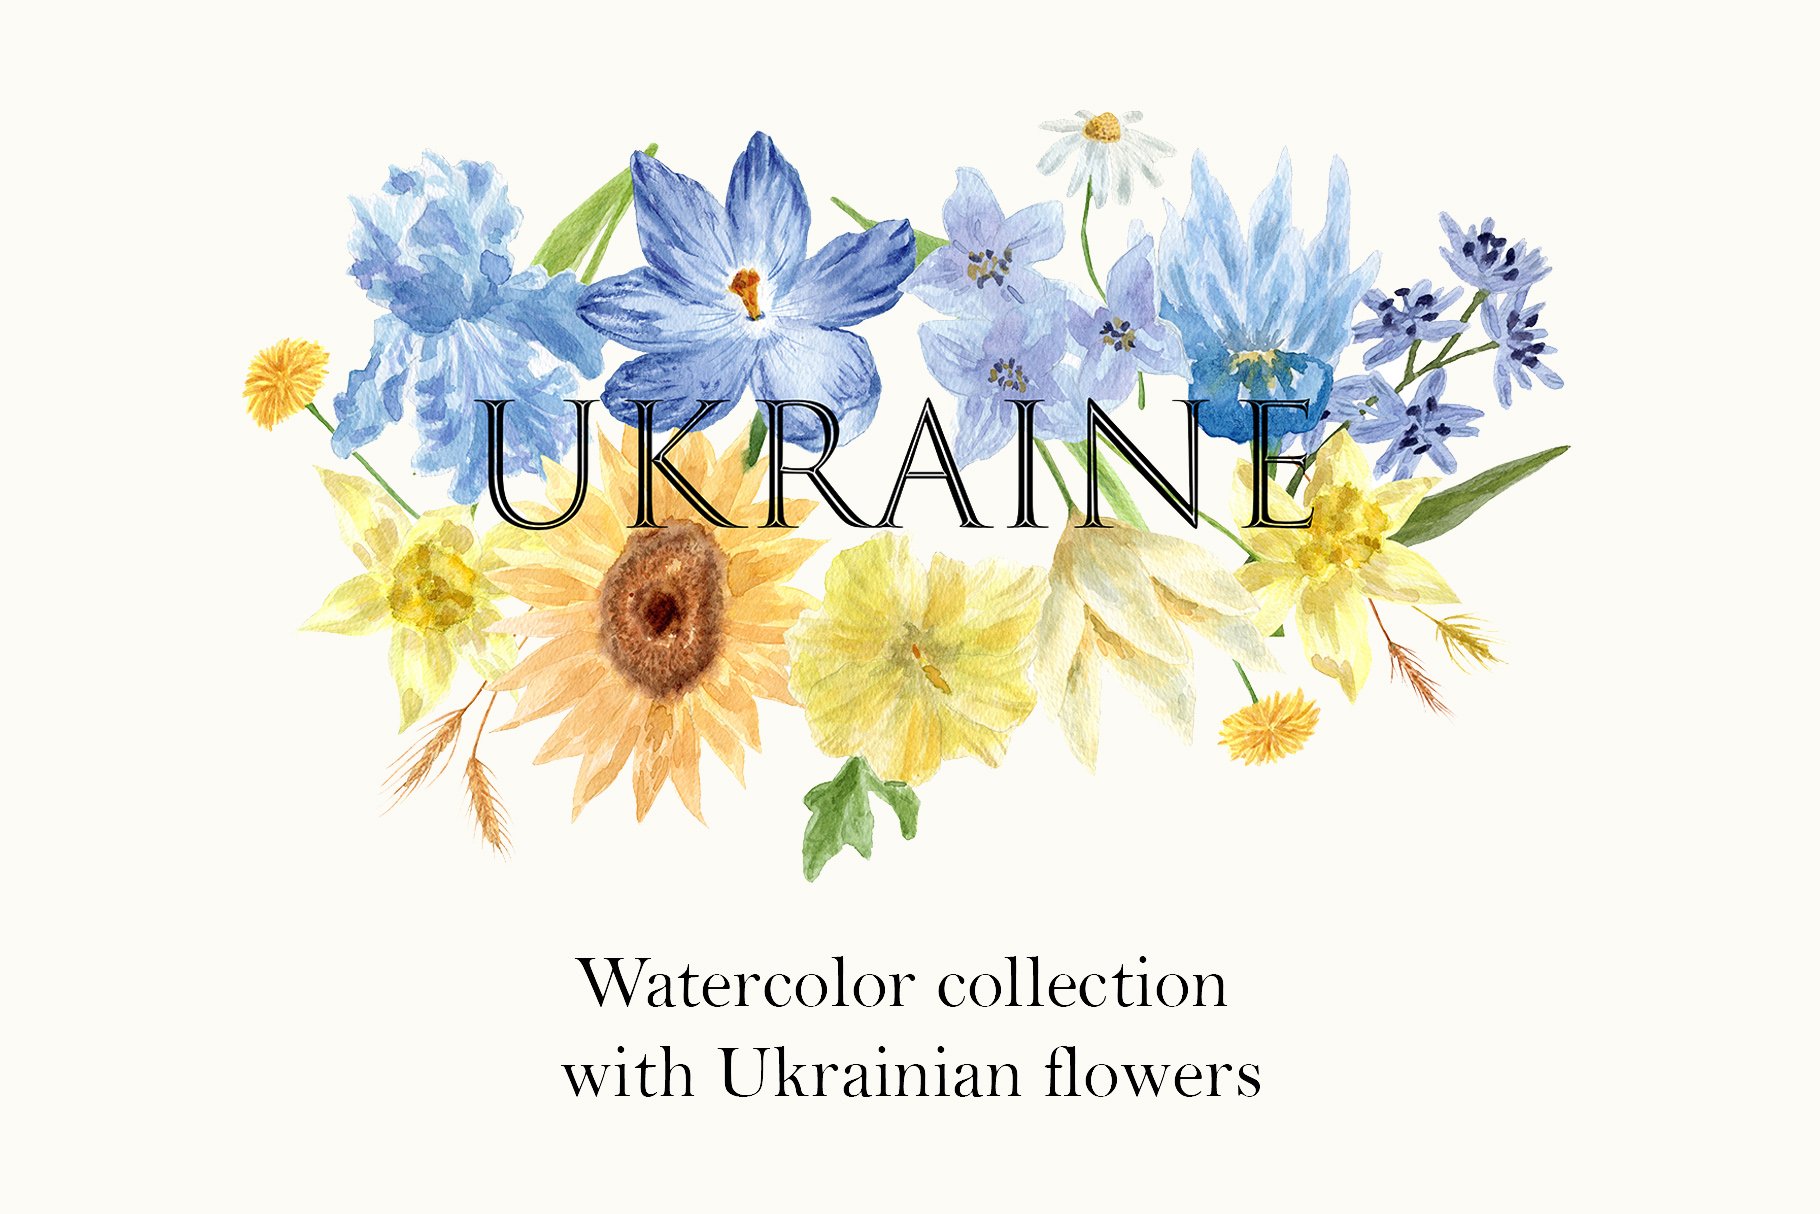 Ukrainian flowers. Help Save Ukraine cover image.